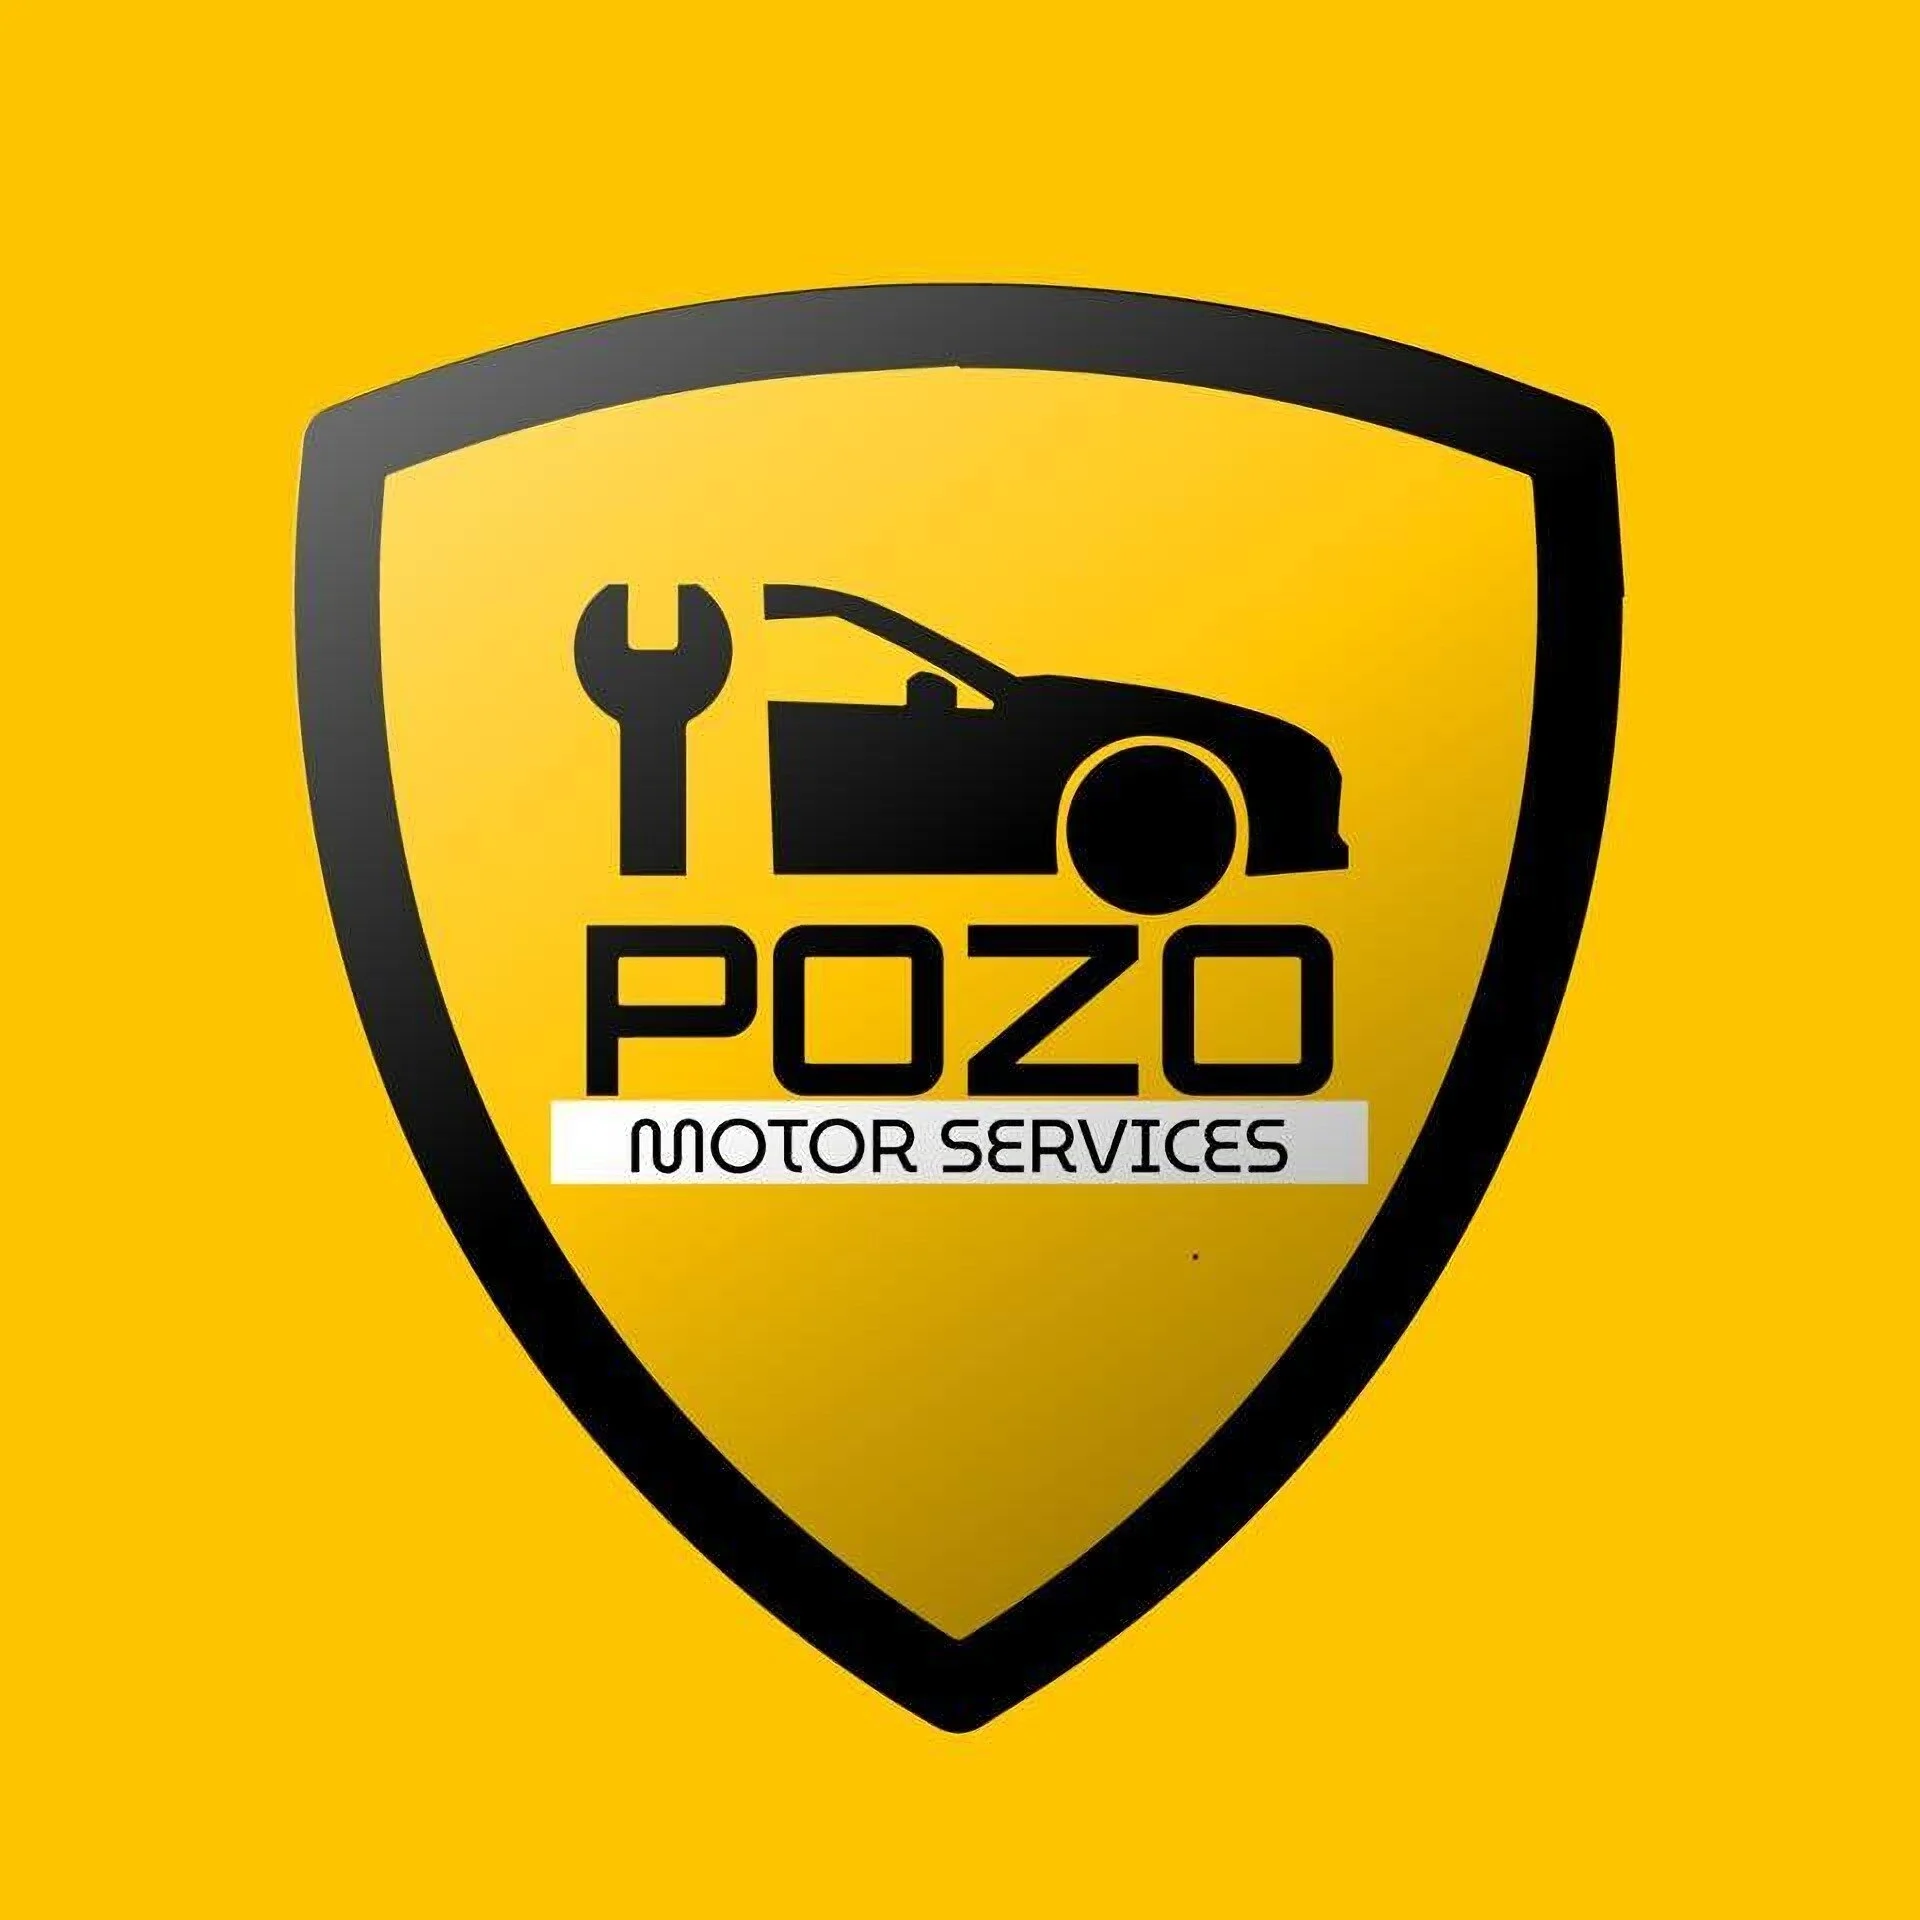 mantenimiento mecanico-mecanica-latoneria-automotriz-pozo-motor-services-13685